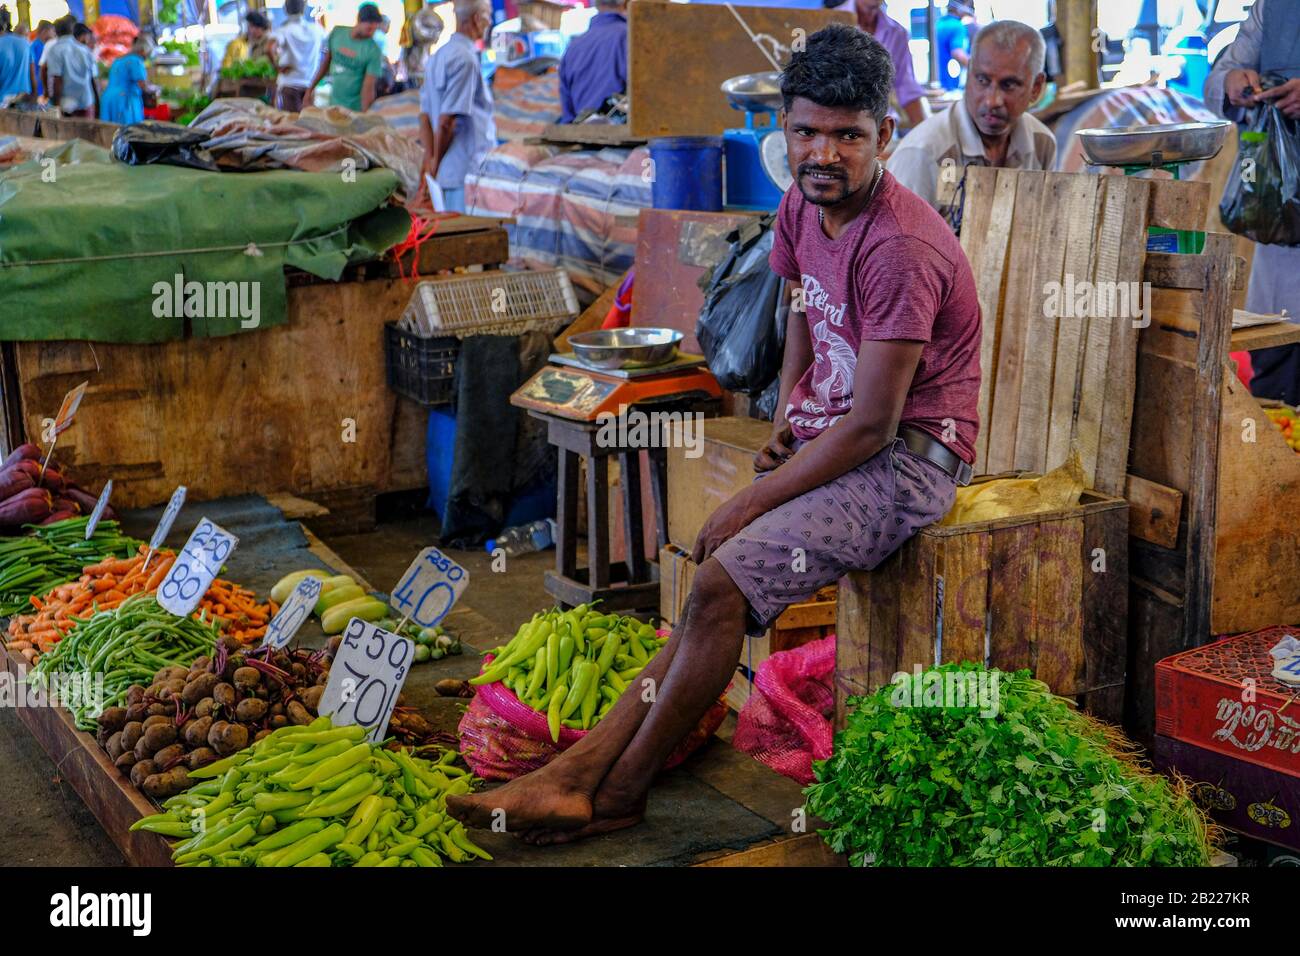 Colombo, Sri Lanka - February 2020: A man selling vegetables at the Colombo market on February 4, 2020 in Colombo, Sri Lanka. Stock Photo